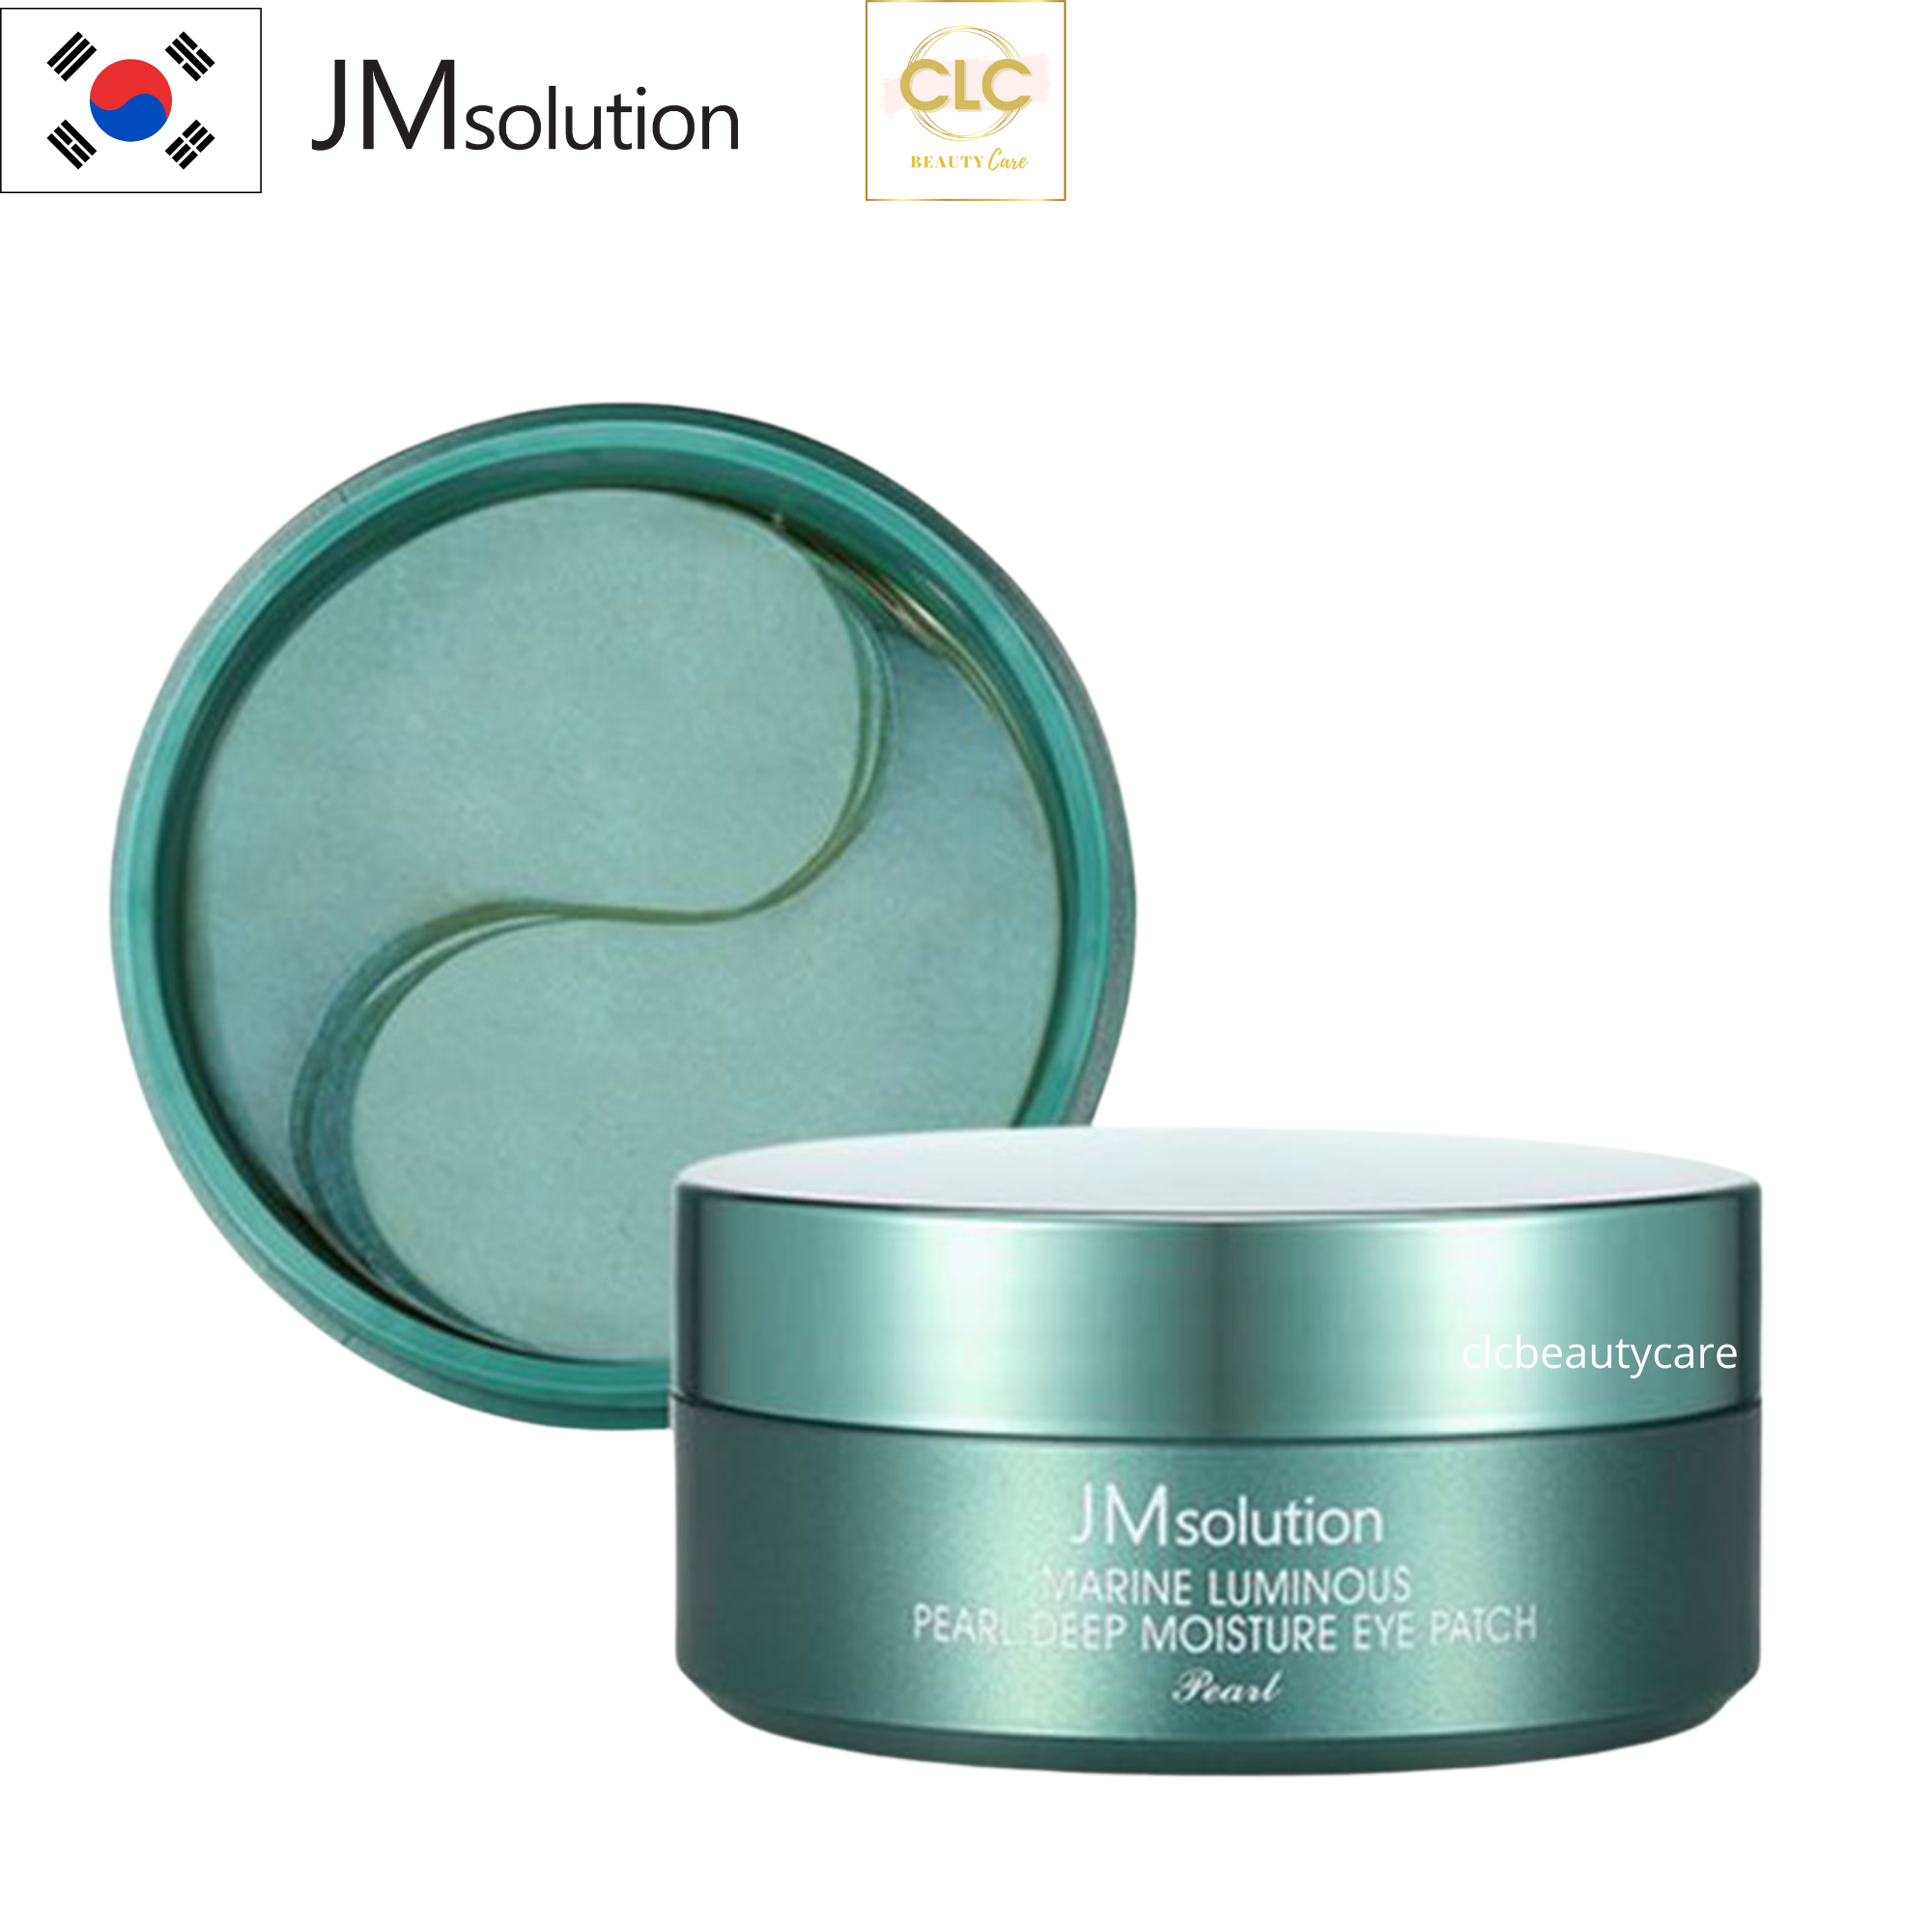 Mặt nạ mắt JM Solution Marine Luminous Pearl Deep Moisture Eye Patch Hàn Quốc - 60 Masks